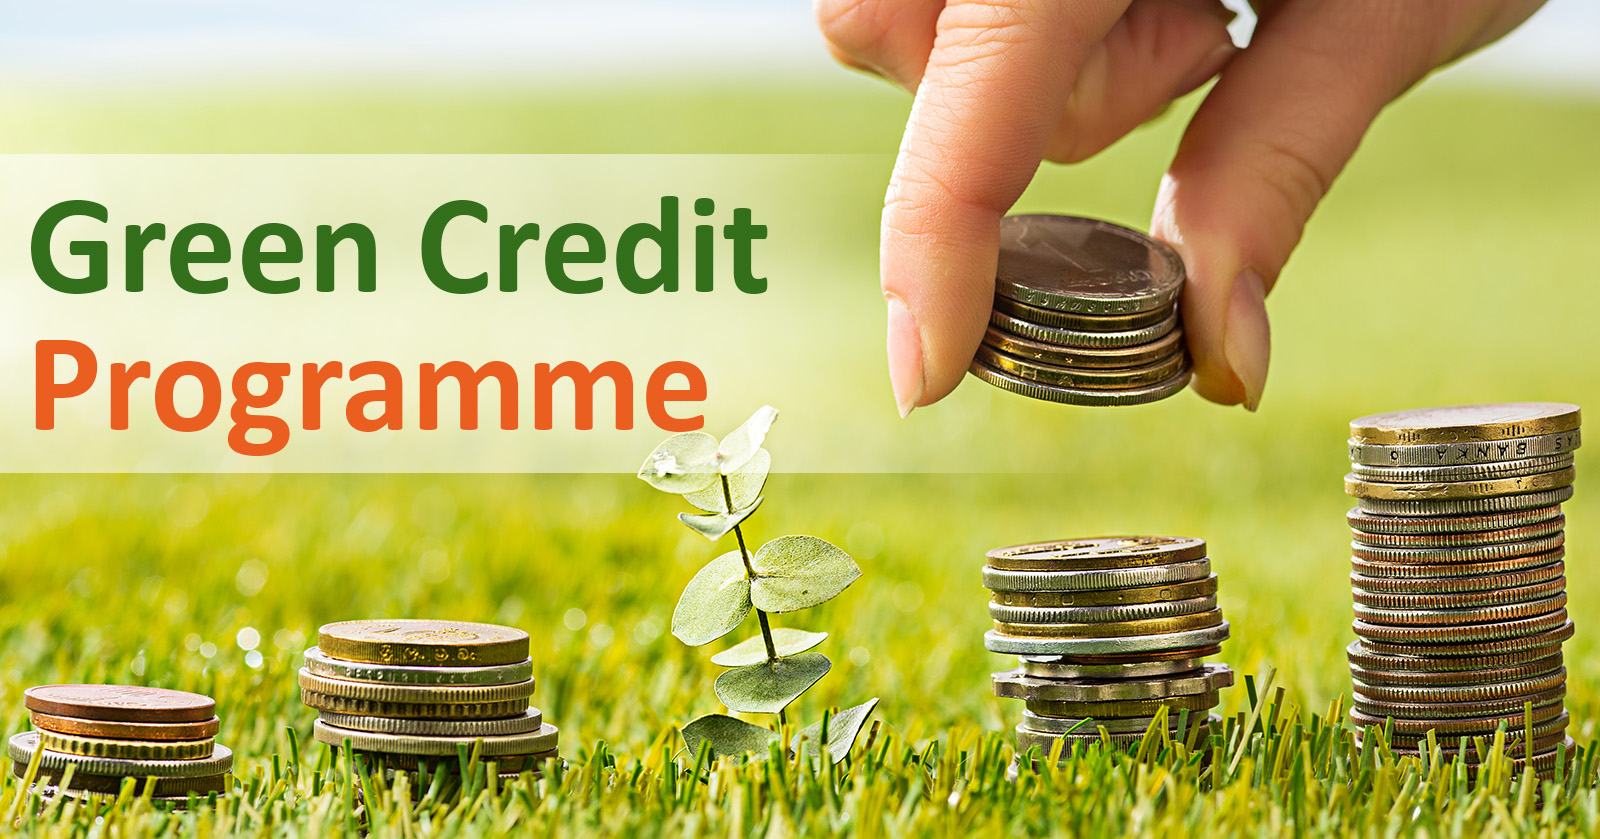 Green Credit Programme tweaked